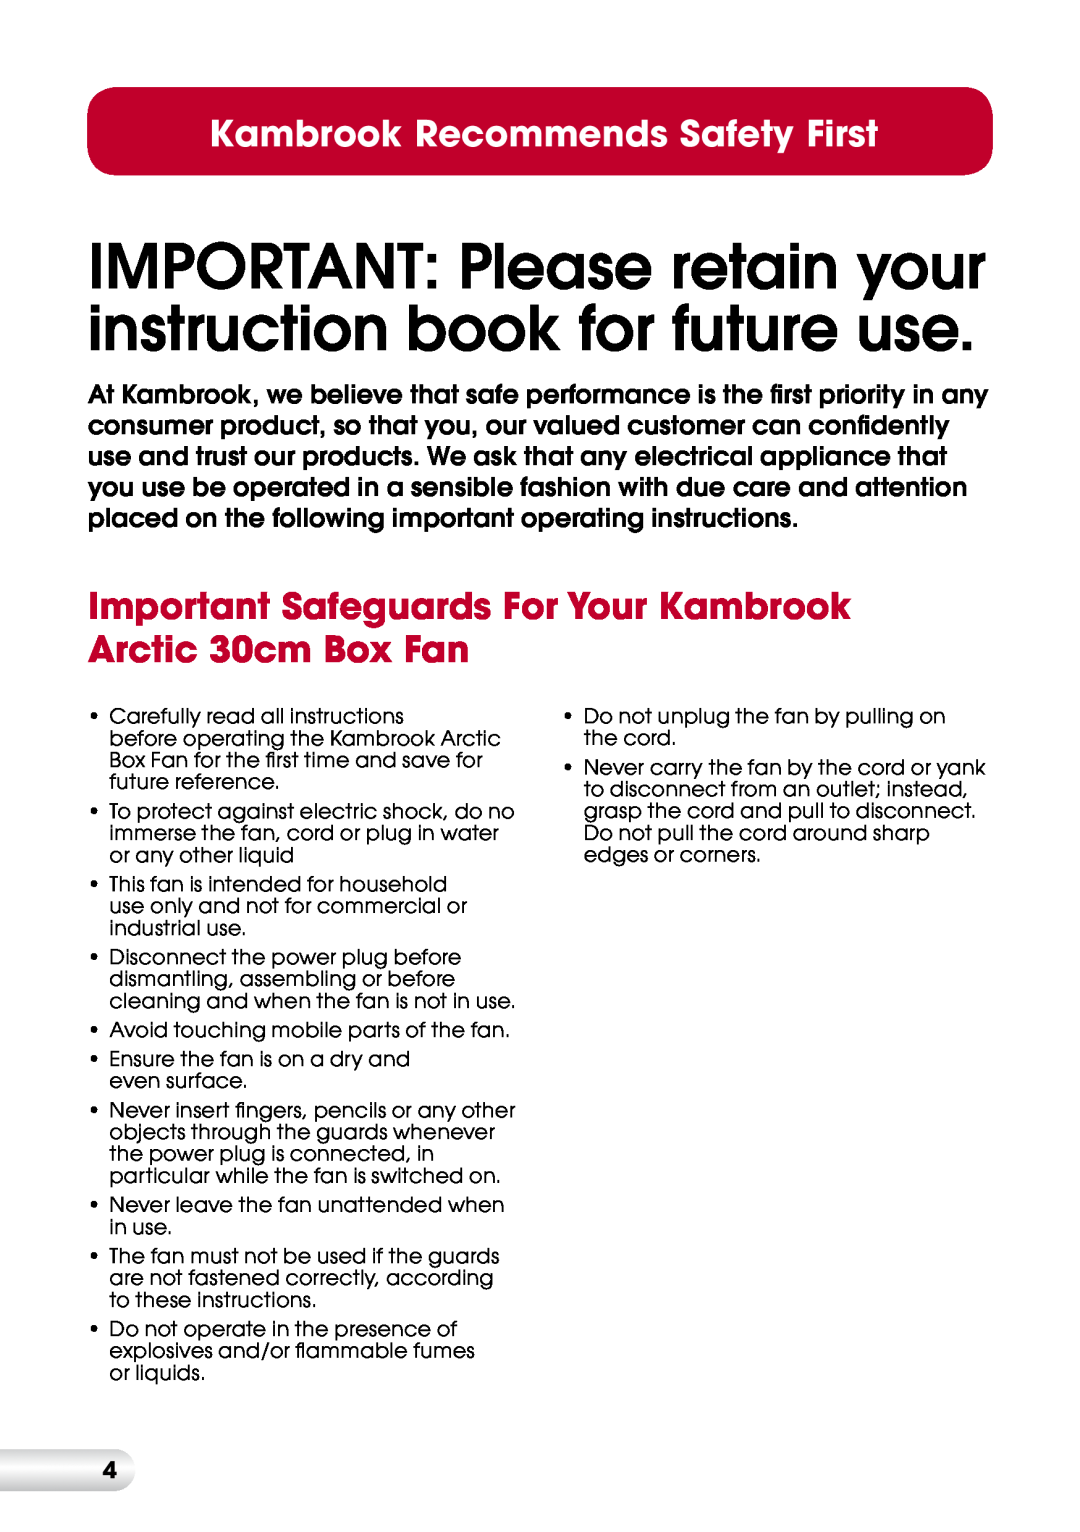 Kambrook KFA612 manual Kambrook Recommends Safety First 